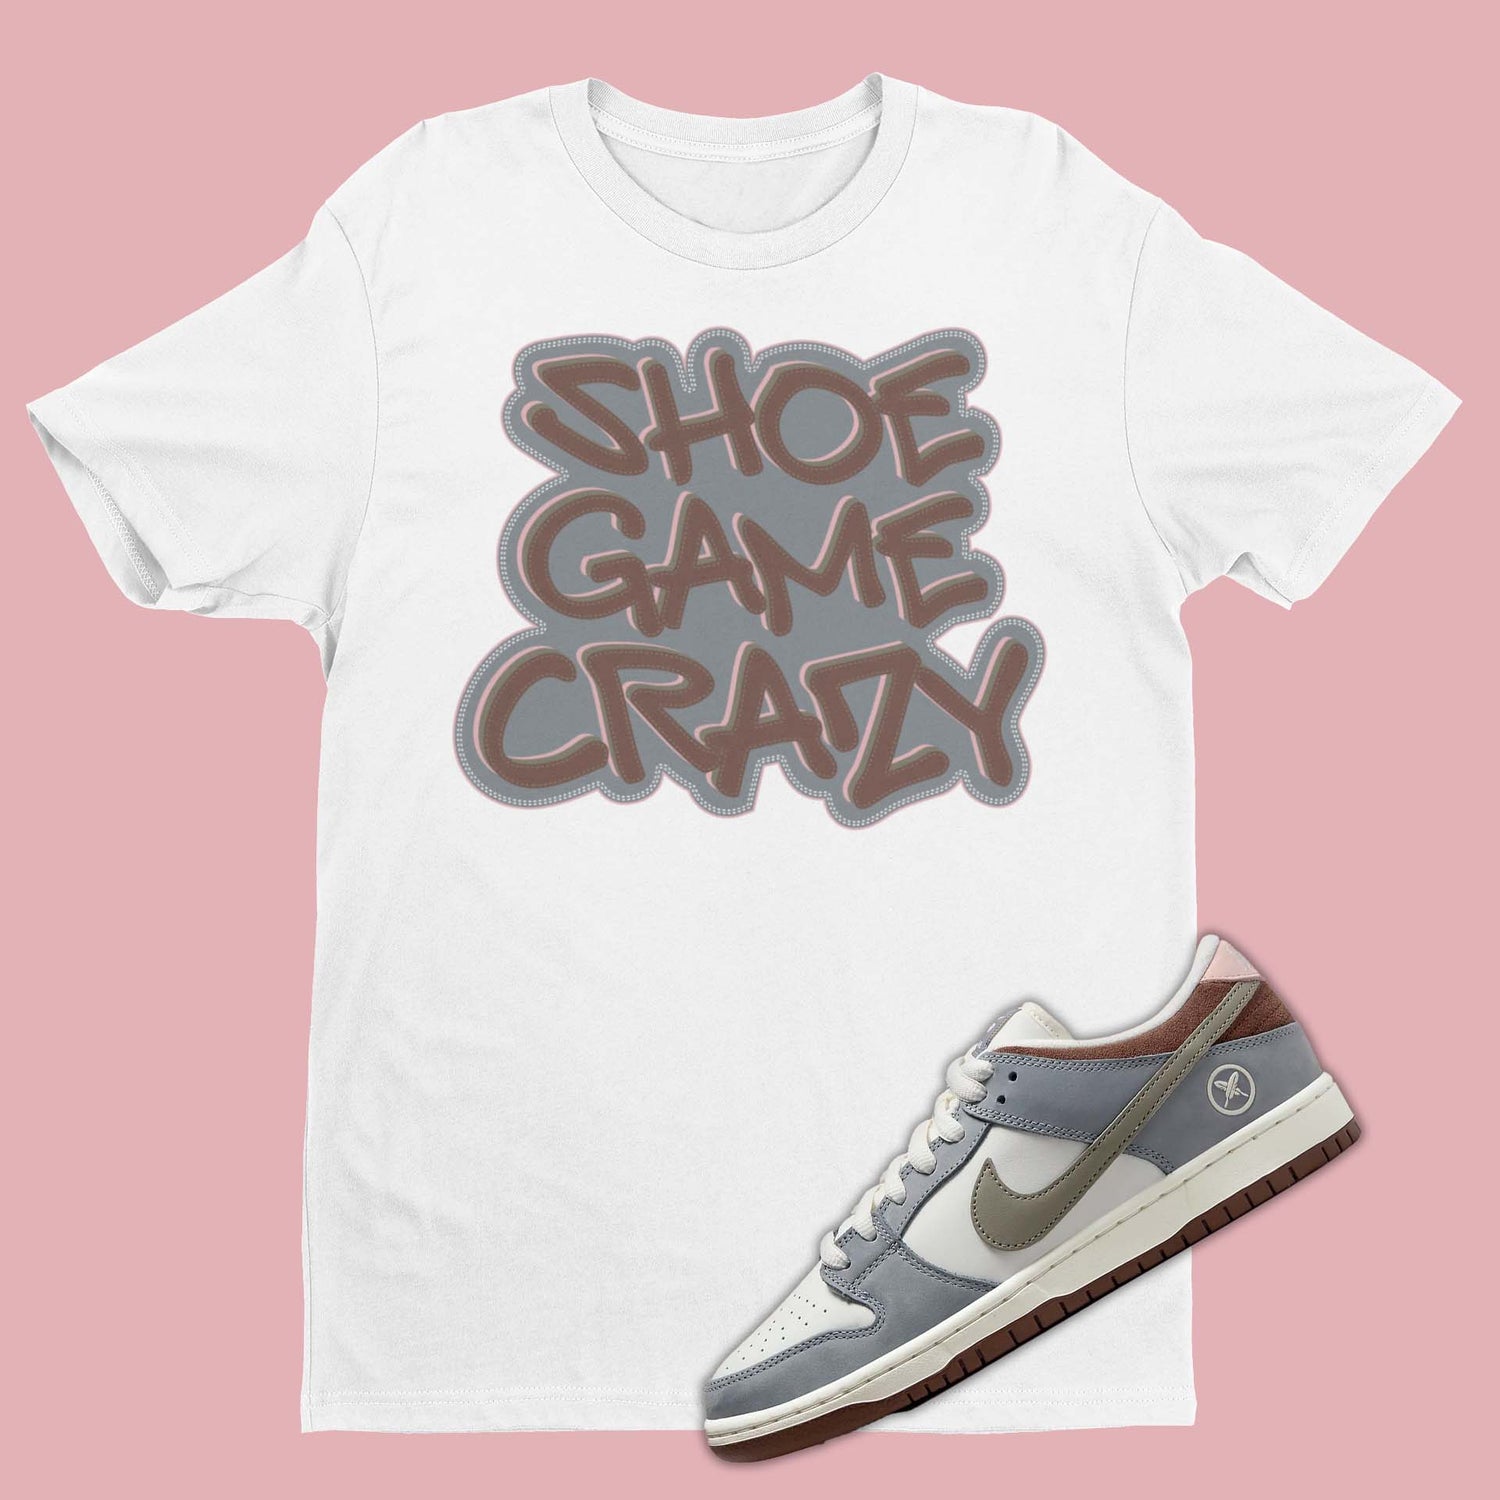 Shoe Game Crazy Nike x Yuto Horigomei Dunk Matching T-Shirt from SNKADX.